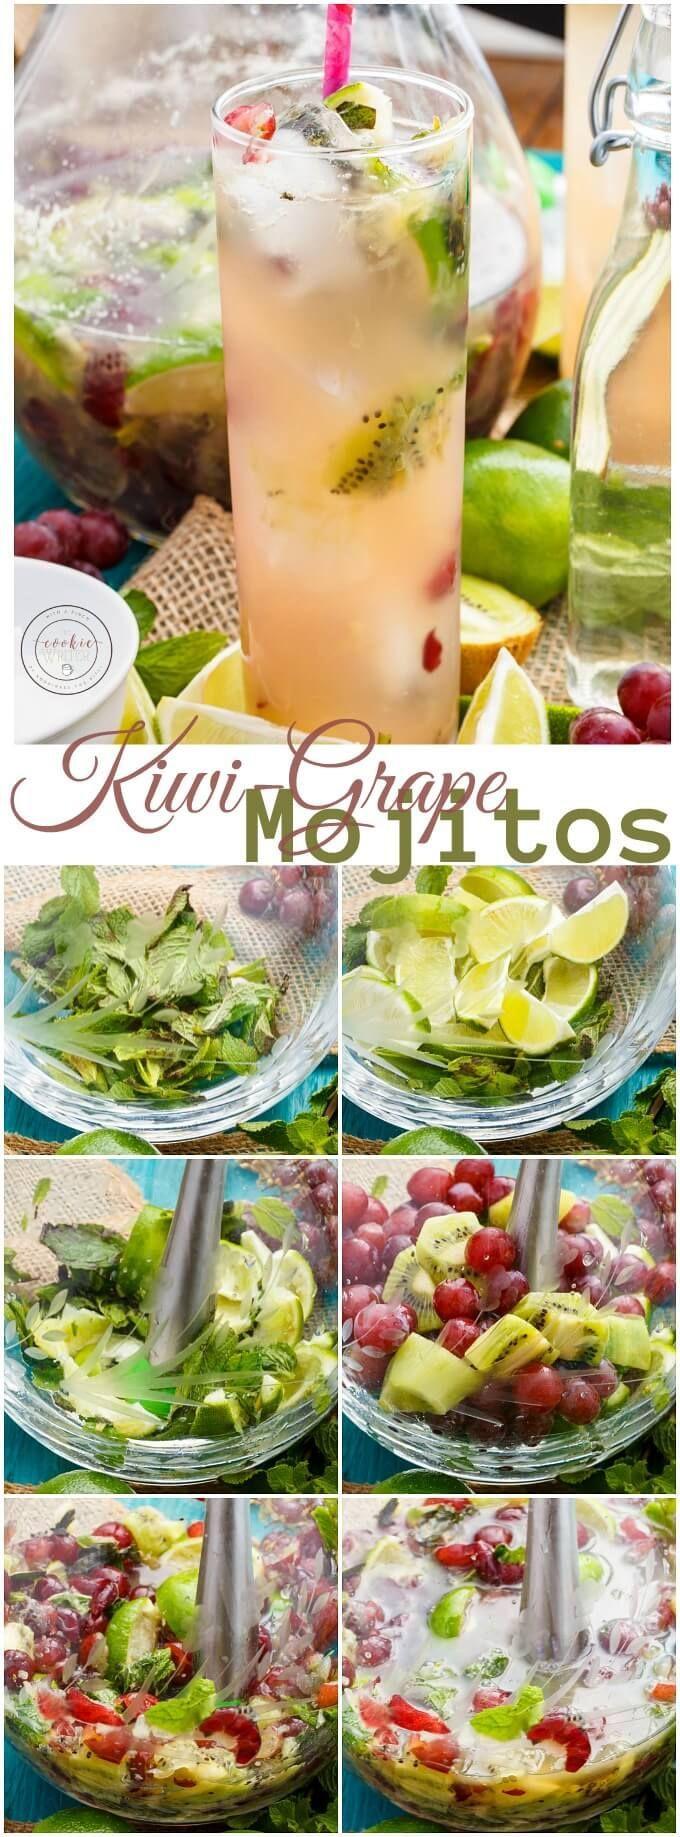 Wedding - Fresh Kiwi-Grape Mojitos